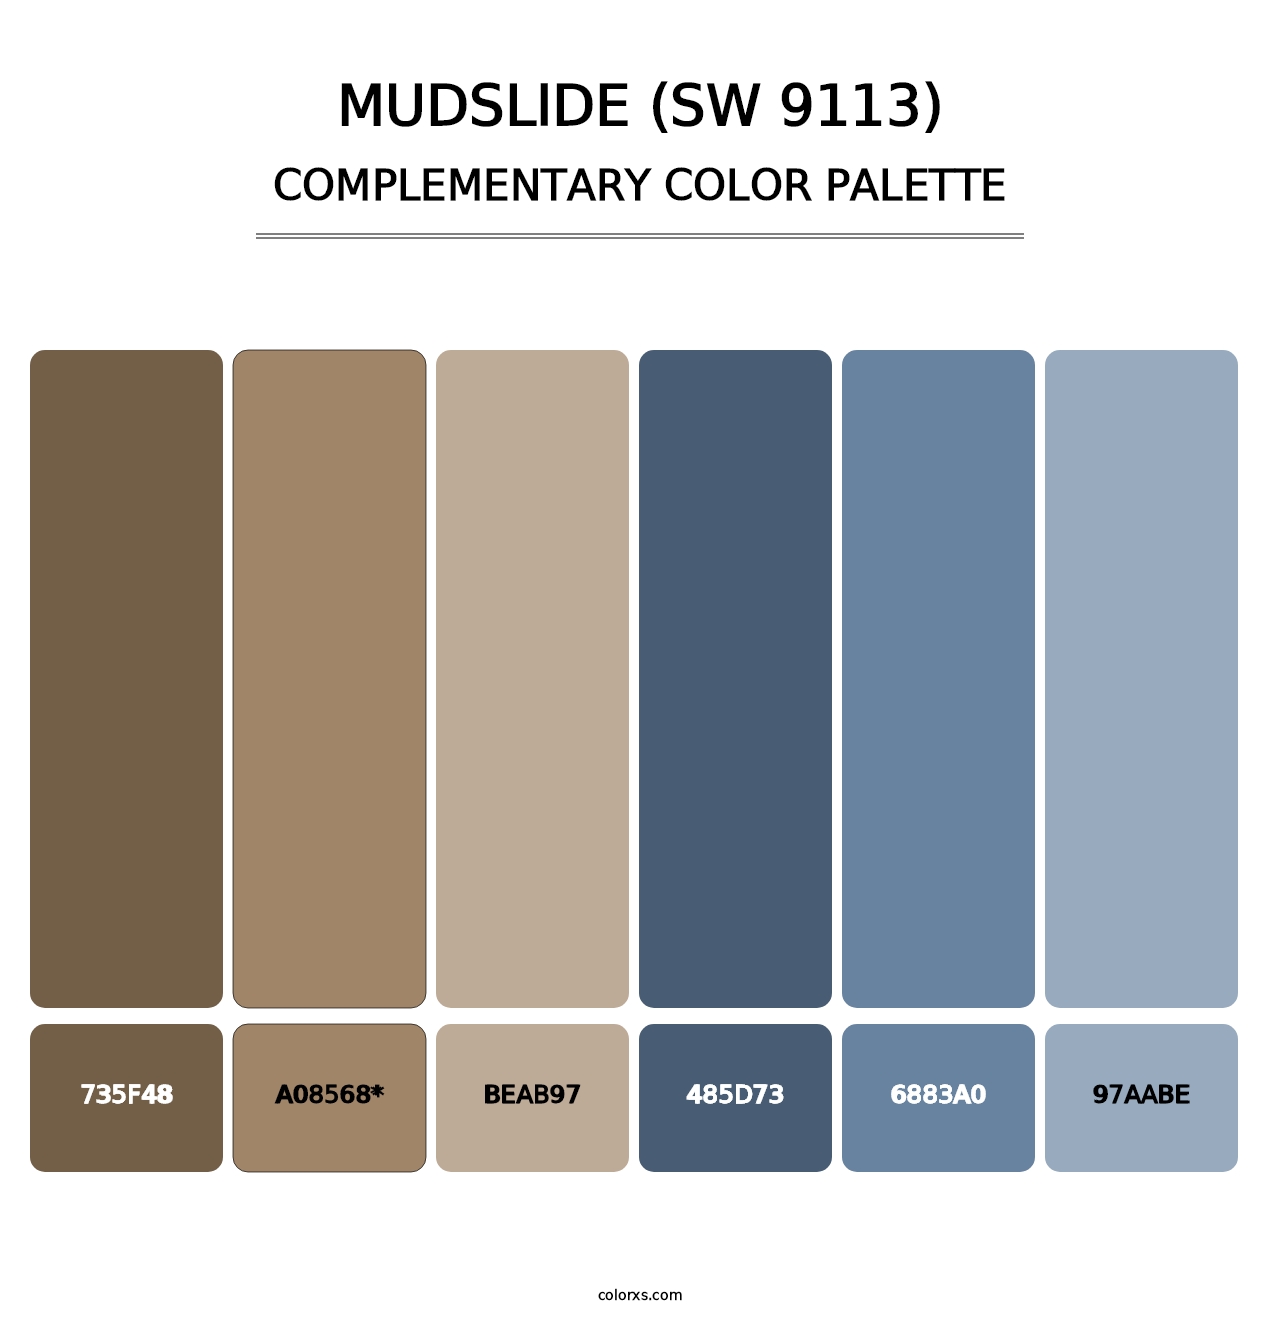 Mudslide (SW 9113) - Complementary Color Palette